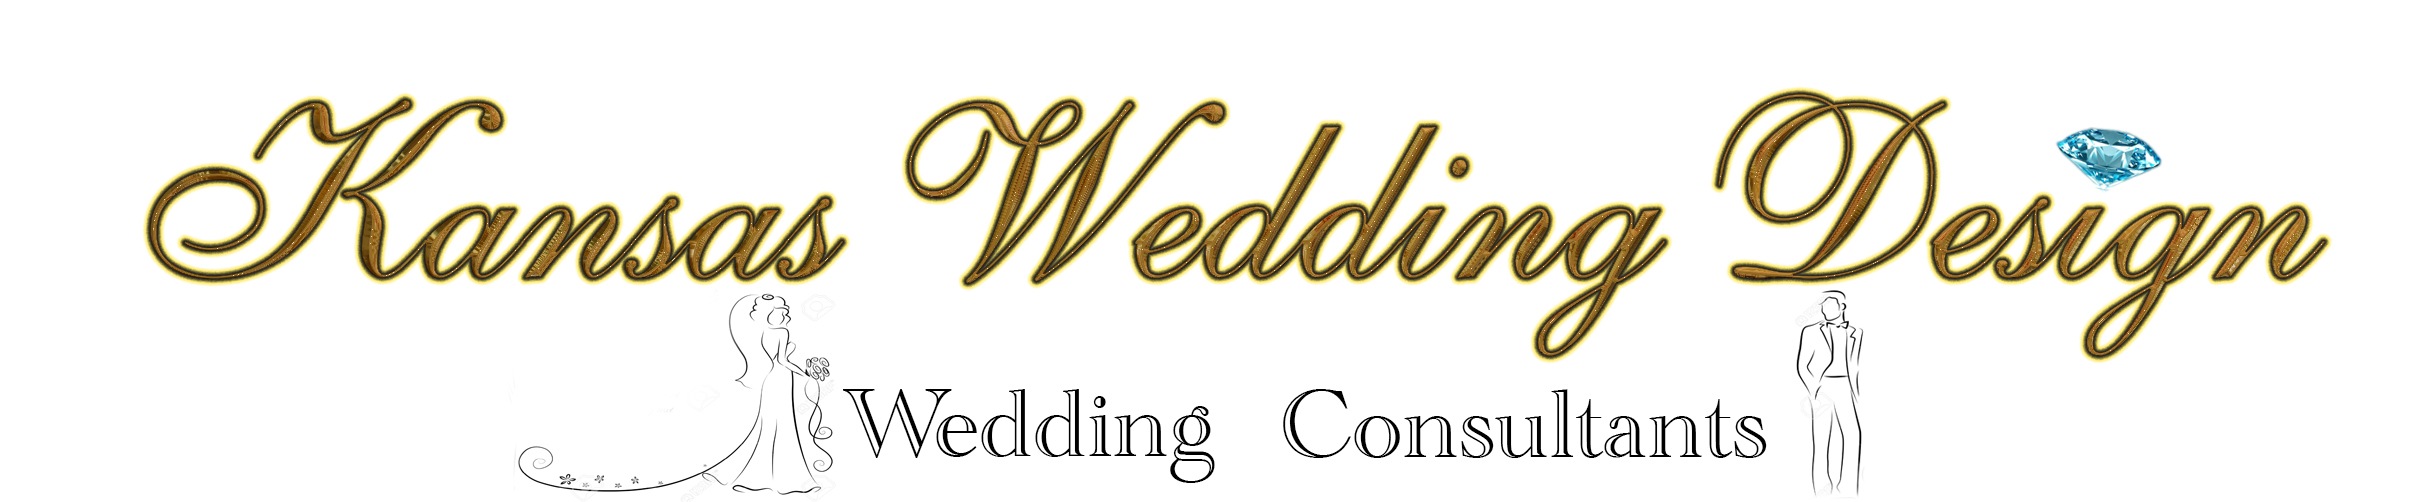 kansas wedding design